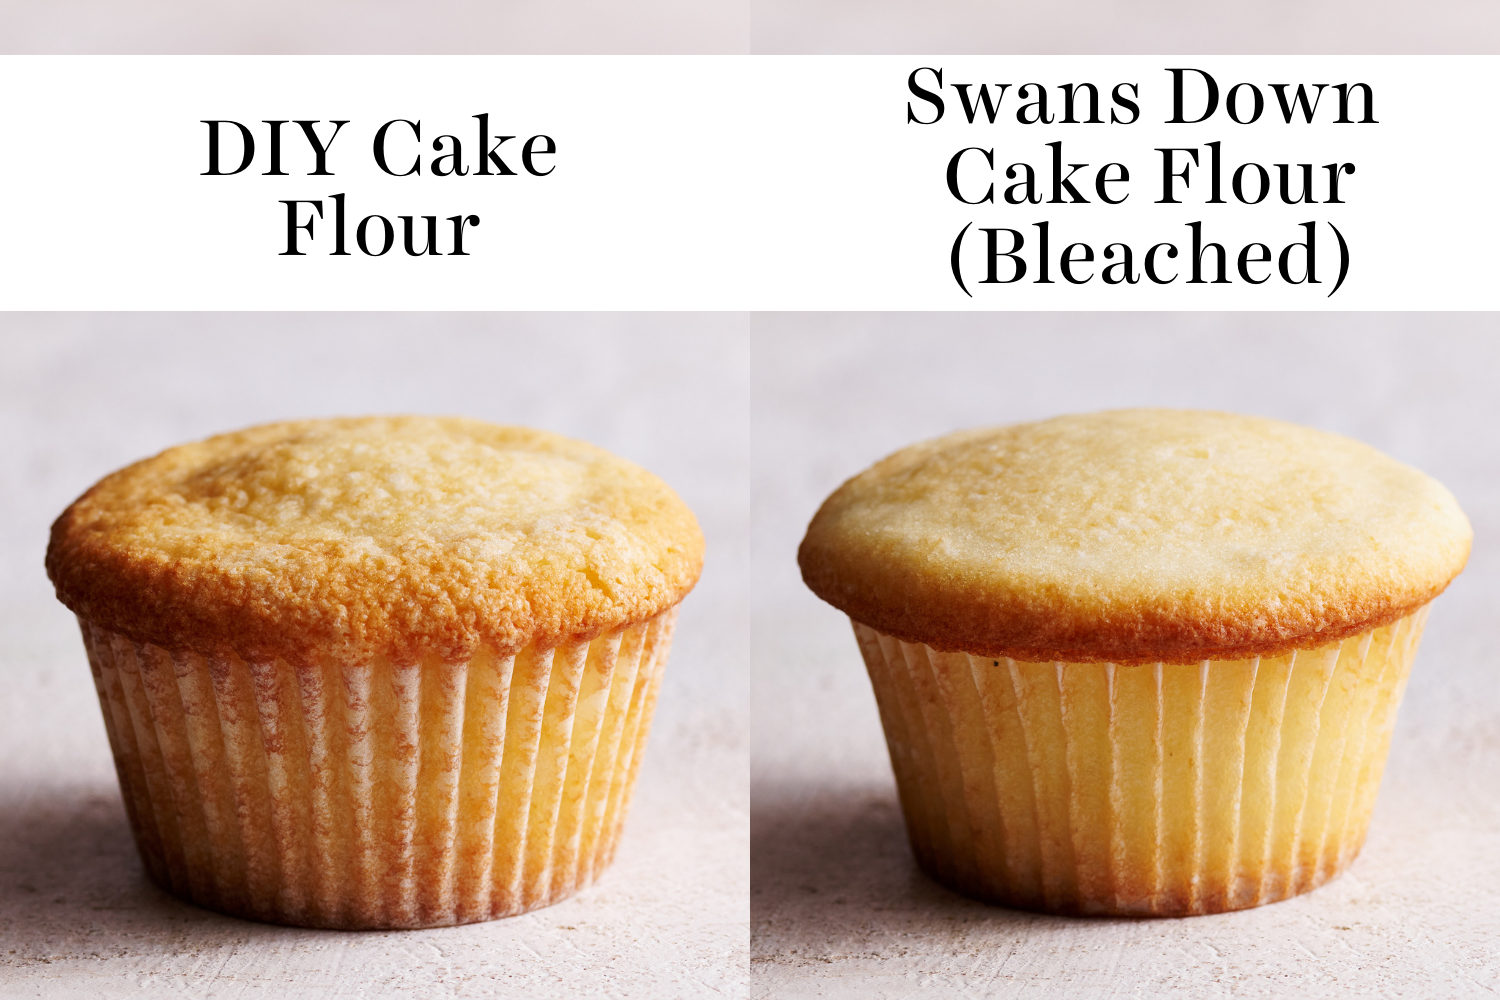 diy cake flour vs. swans down brand cake flour cupcakes side by side.